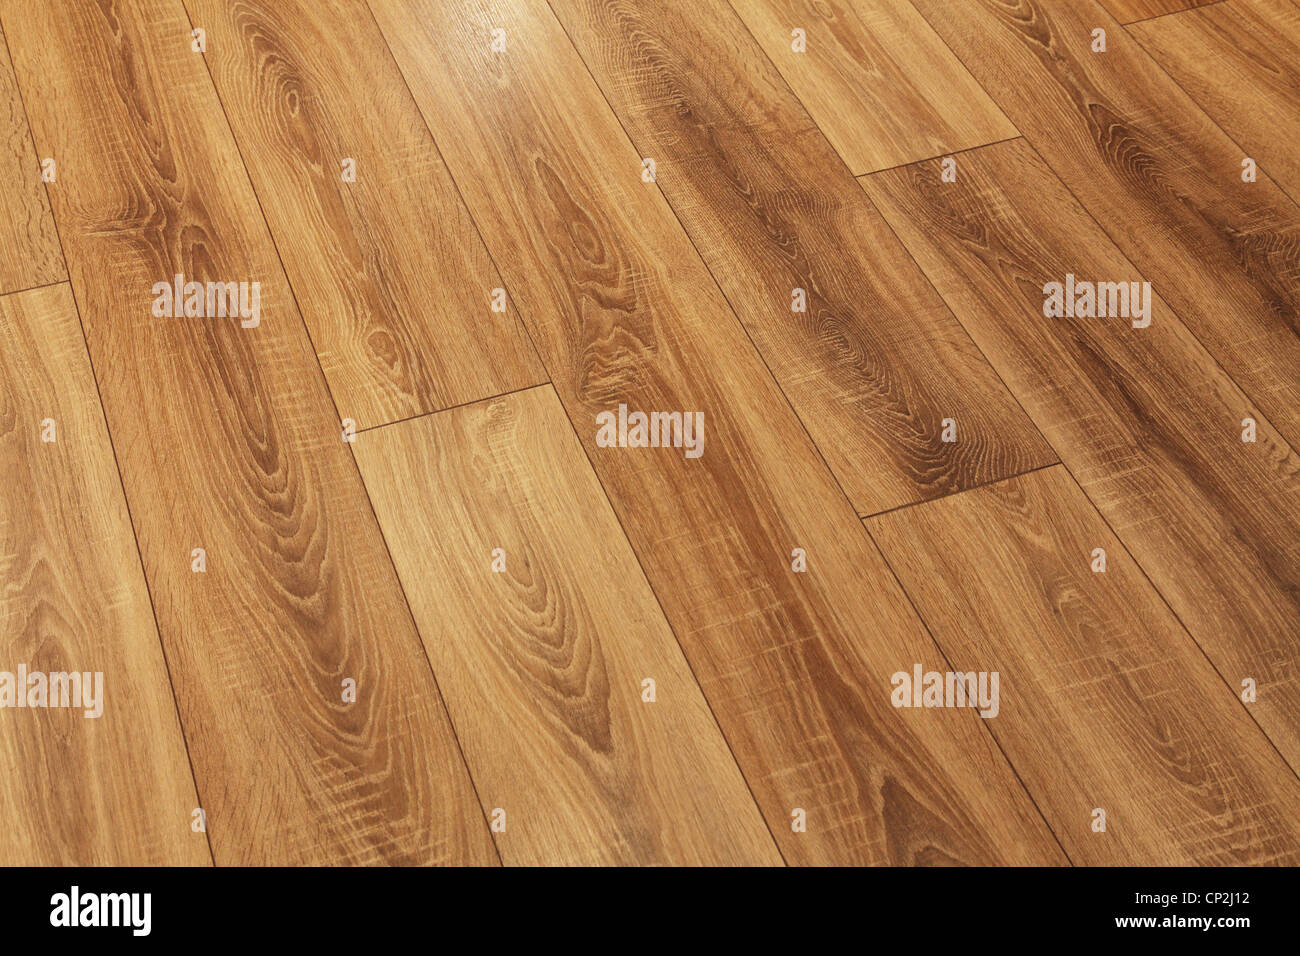 parquet floor of the wooden planks Stock Photo